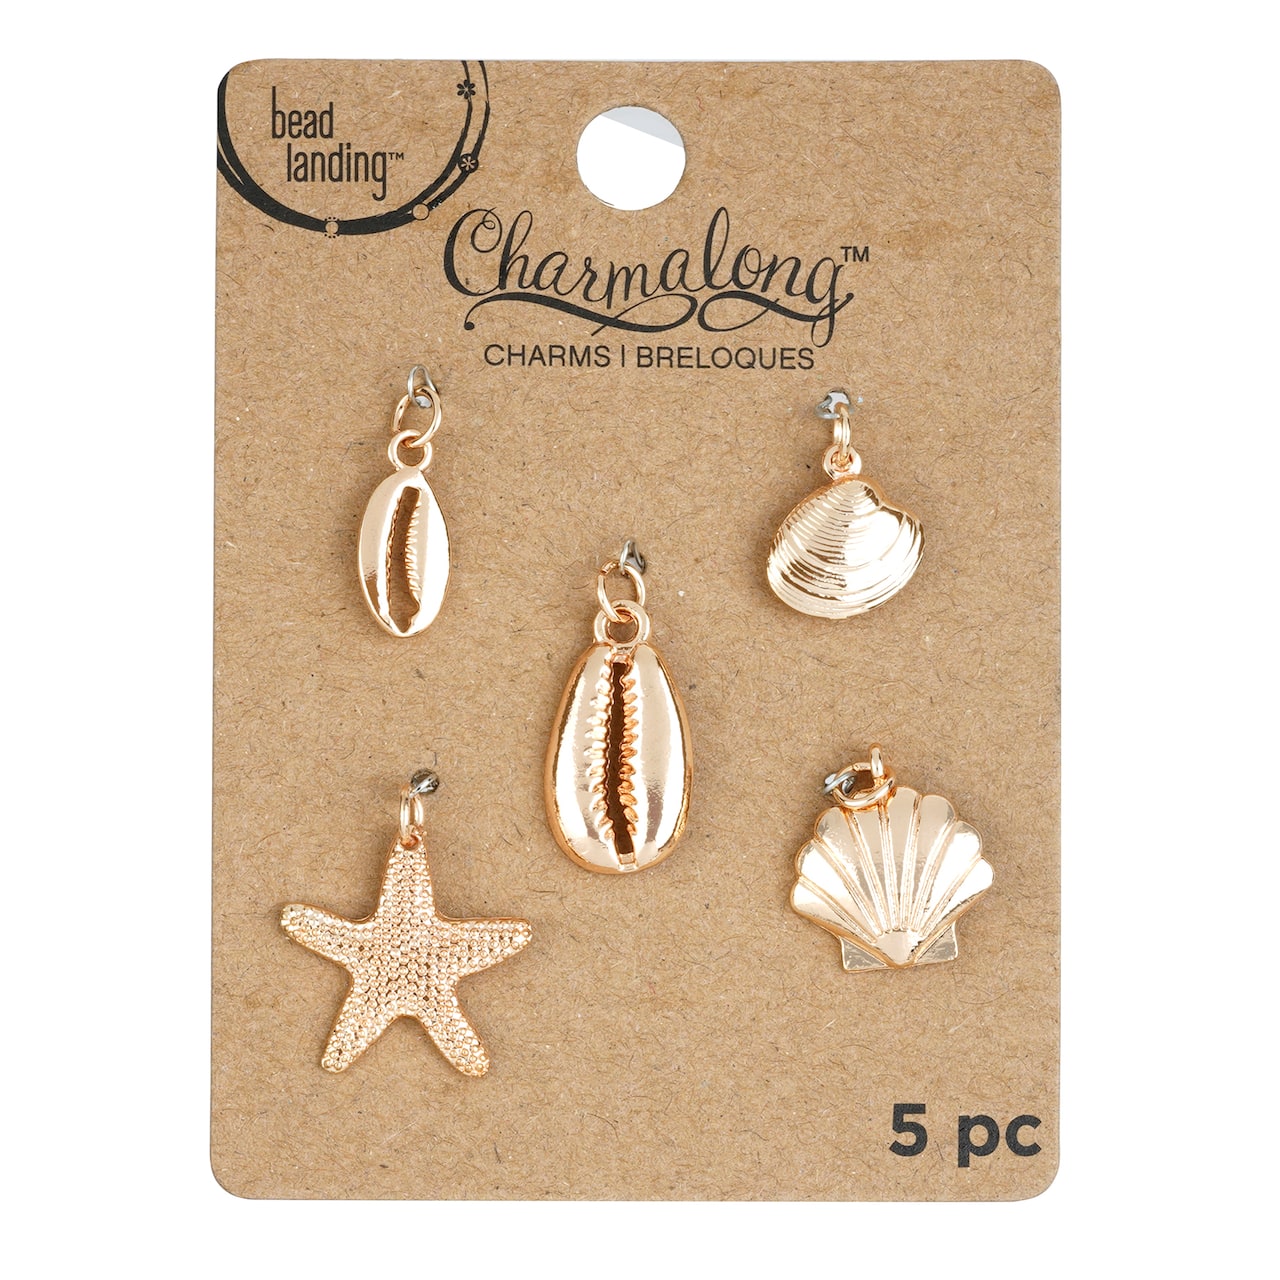 Charmalong&#x2122; Gold Shell Charms by Bead Landing&#x2122;